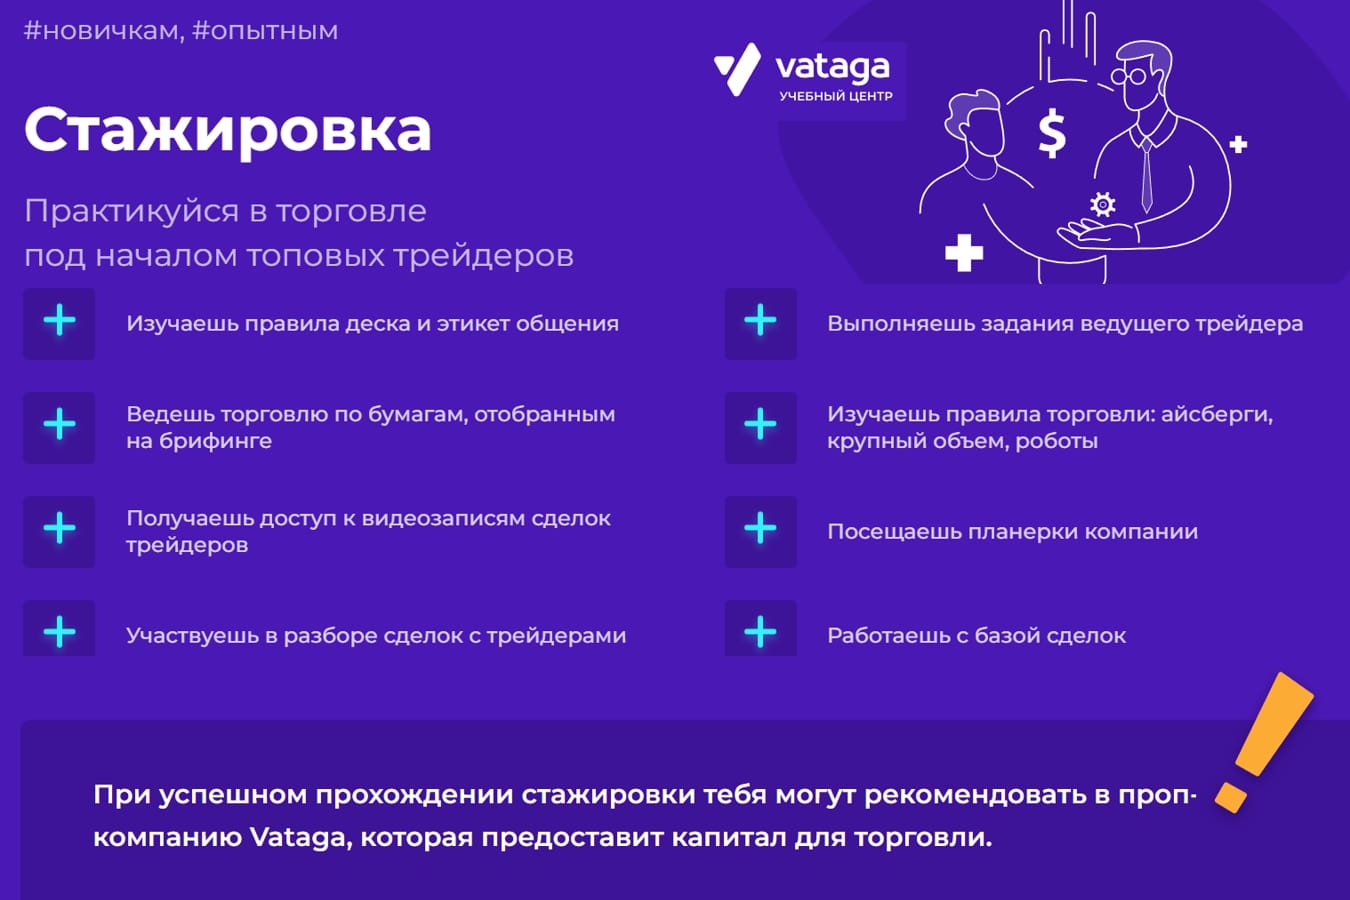 Vataga EasyScalp сайт